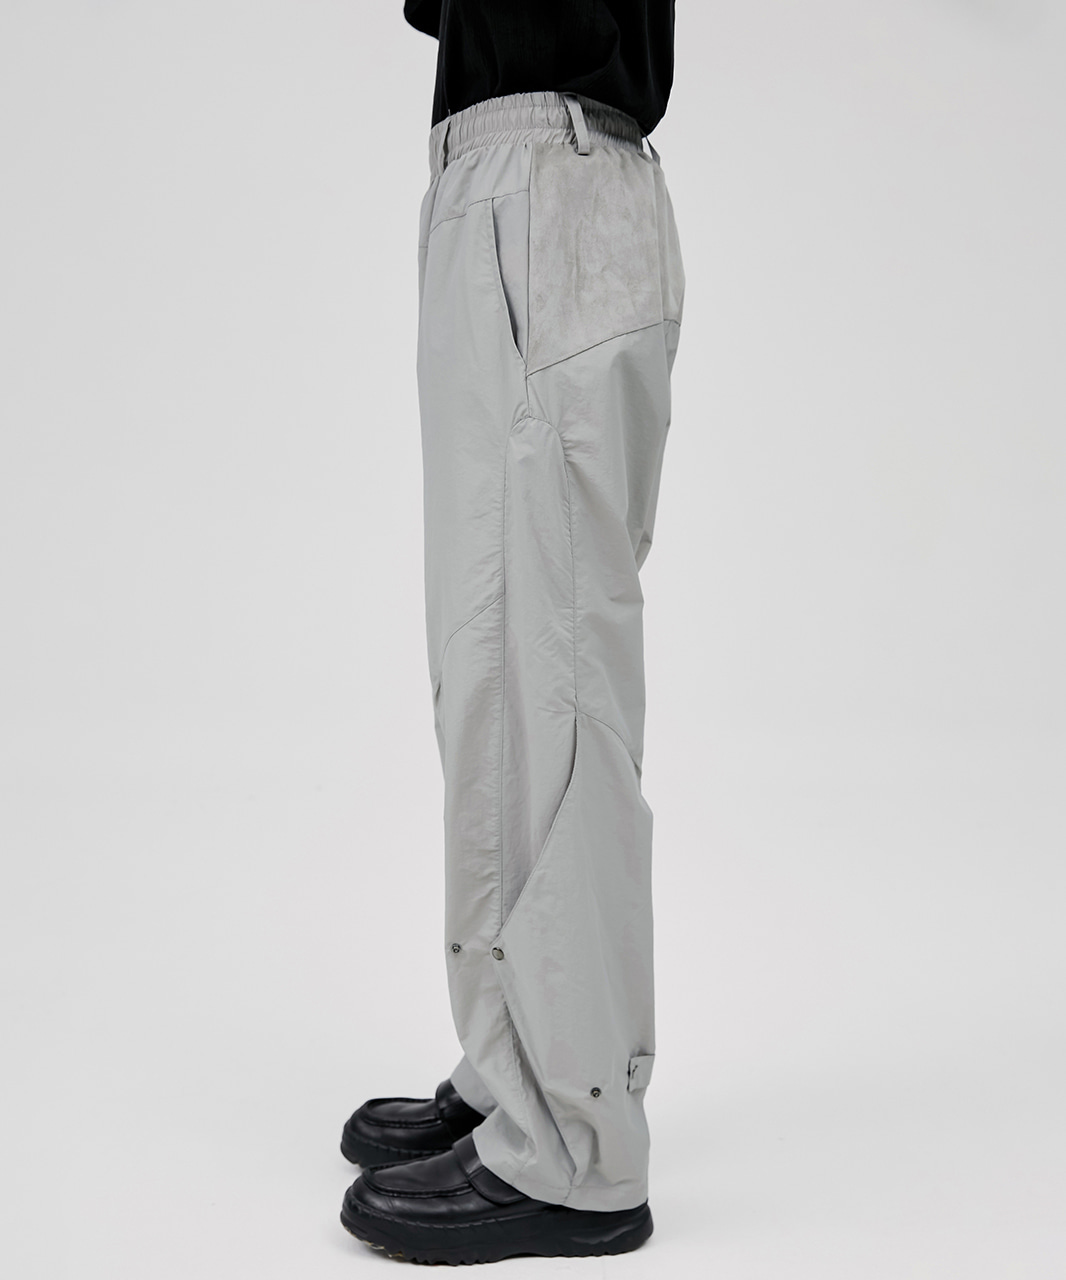 FLARE UP플레어업 Obtuse Triangle Flap Pants - Gray (FL-226)